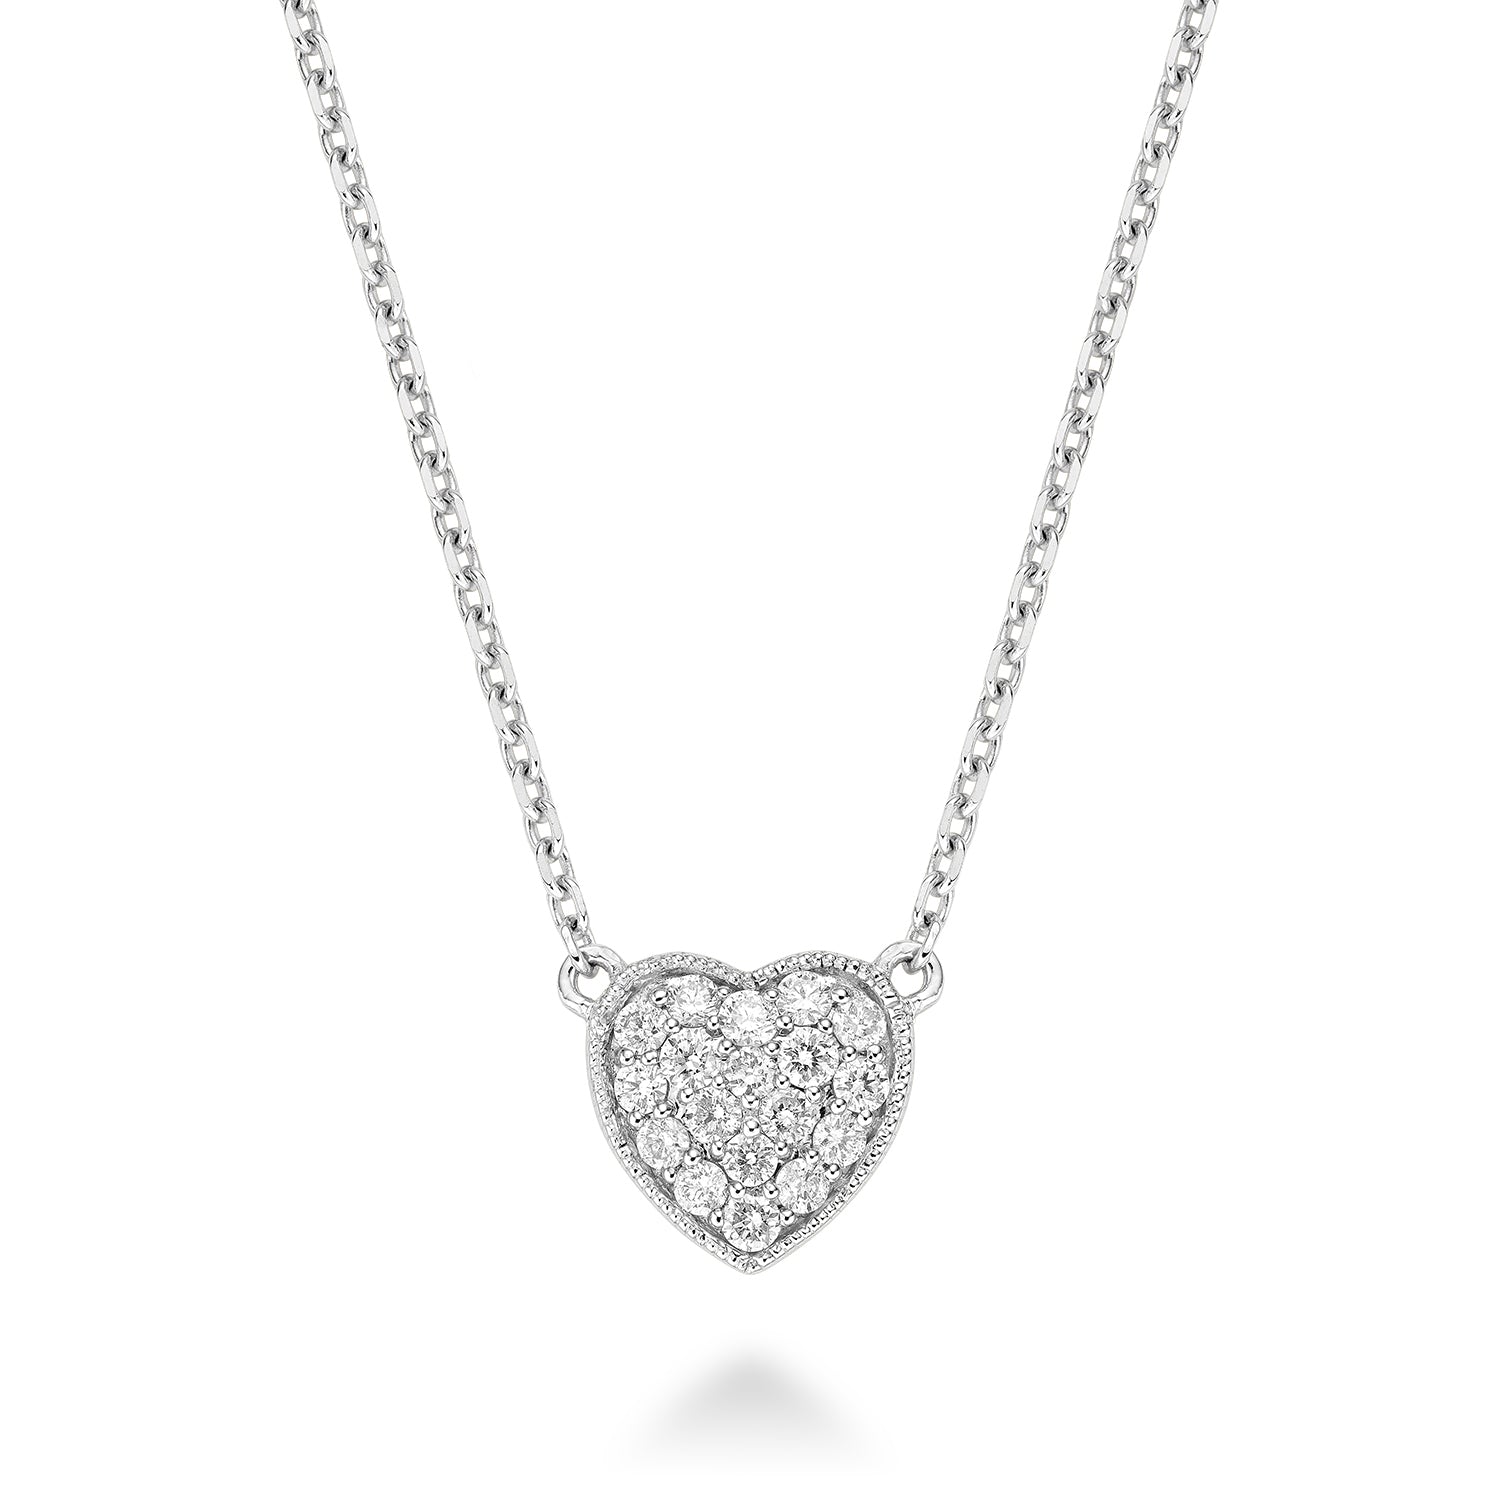 Hemsleys Collection 14K Micro Diamond Pavé Heart Necklace